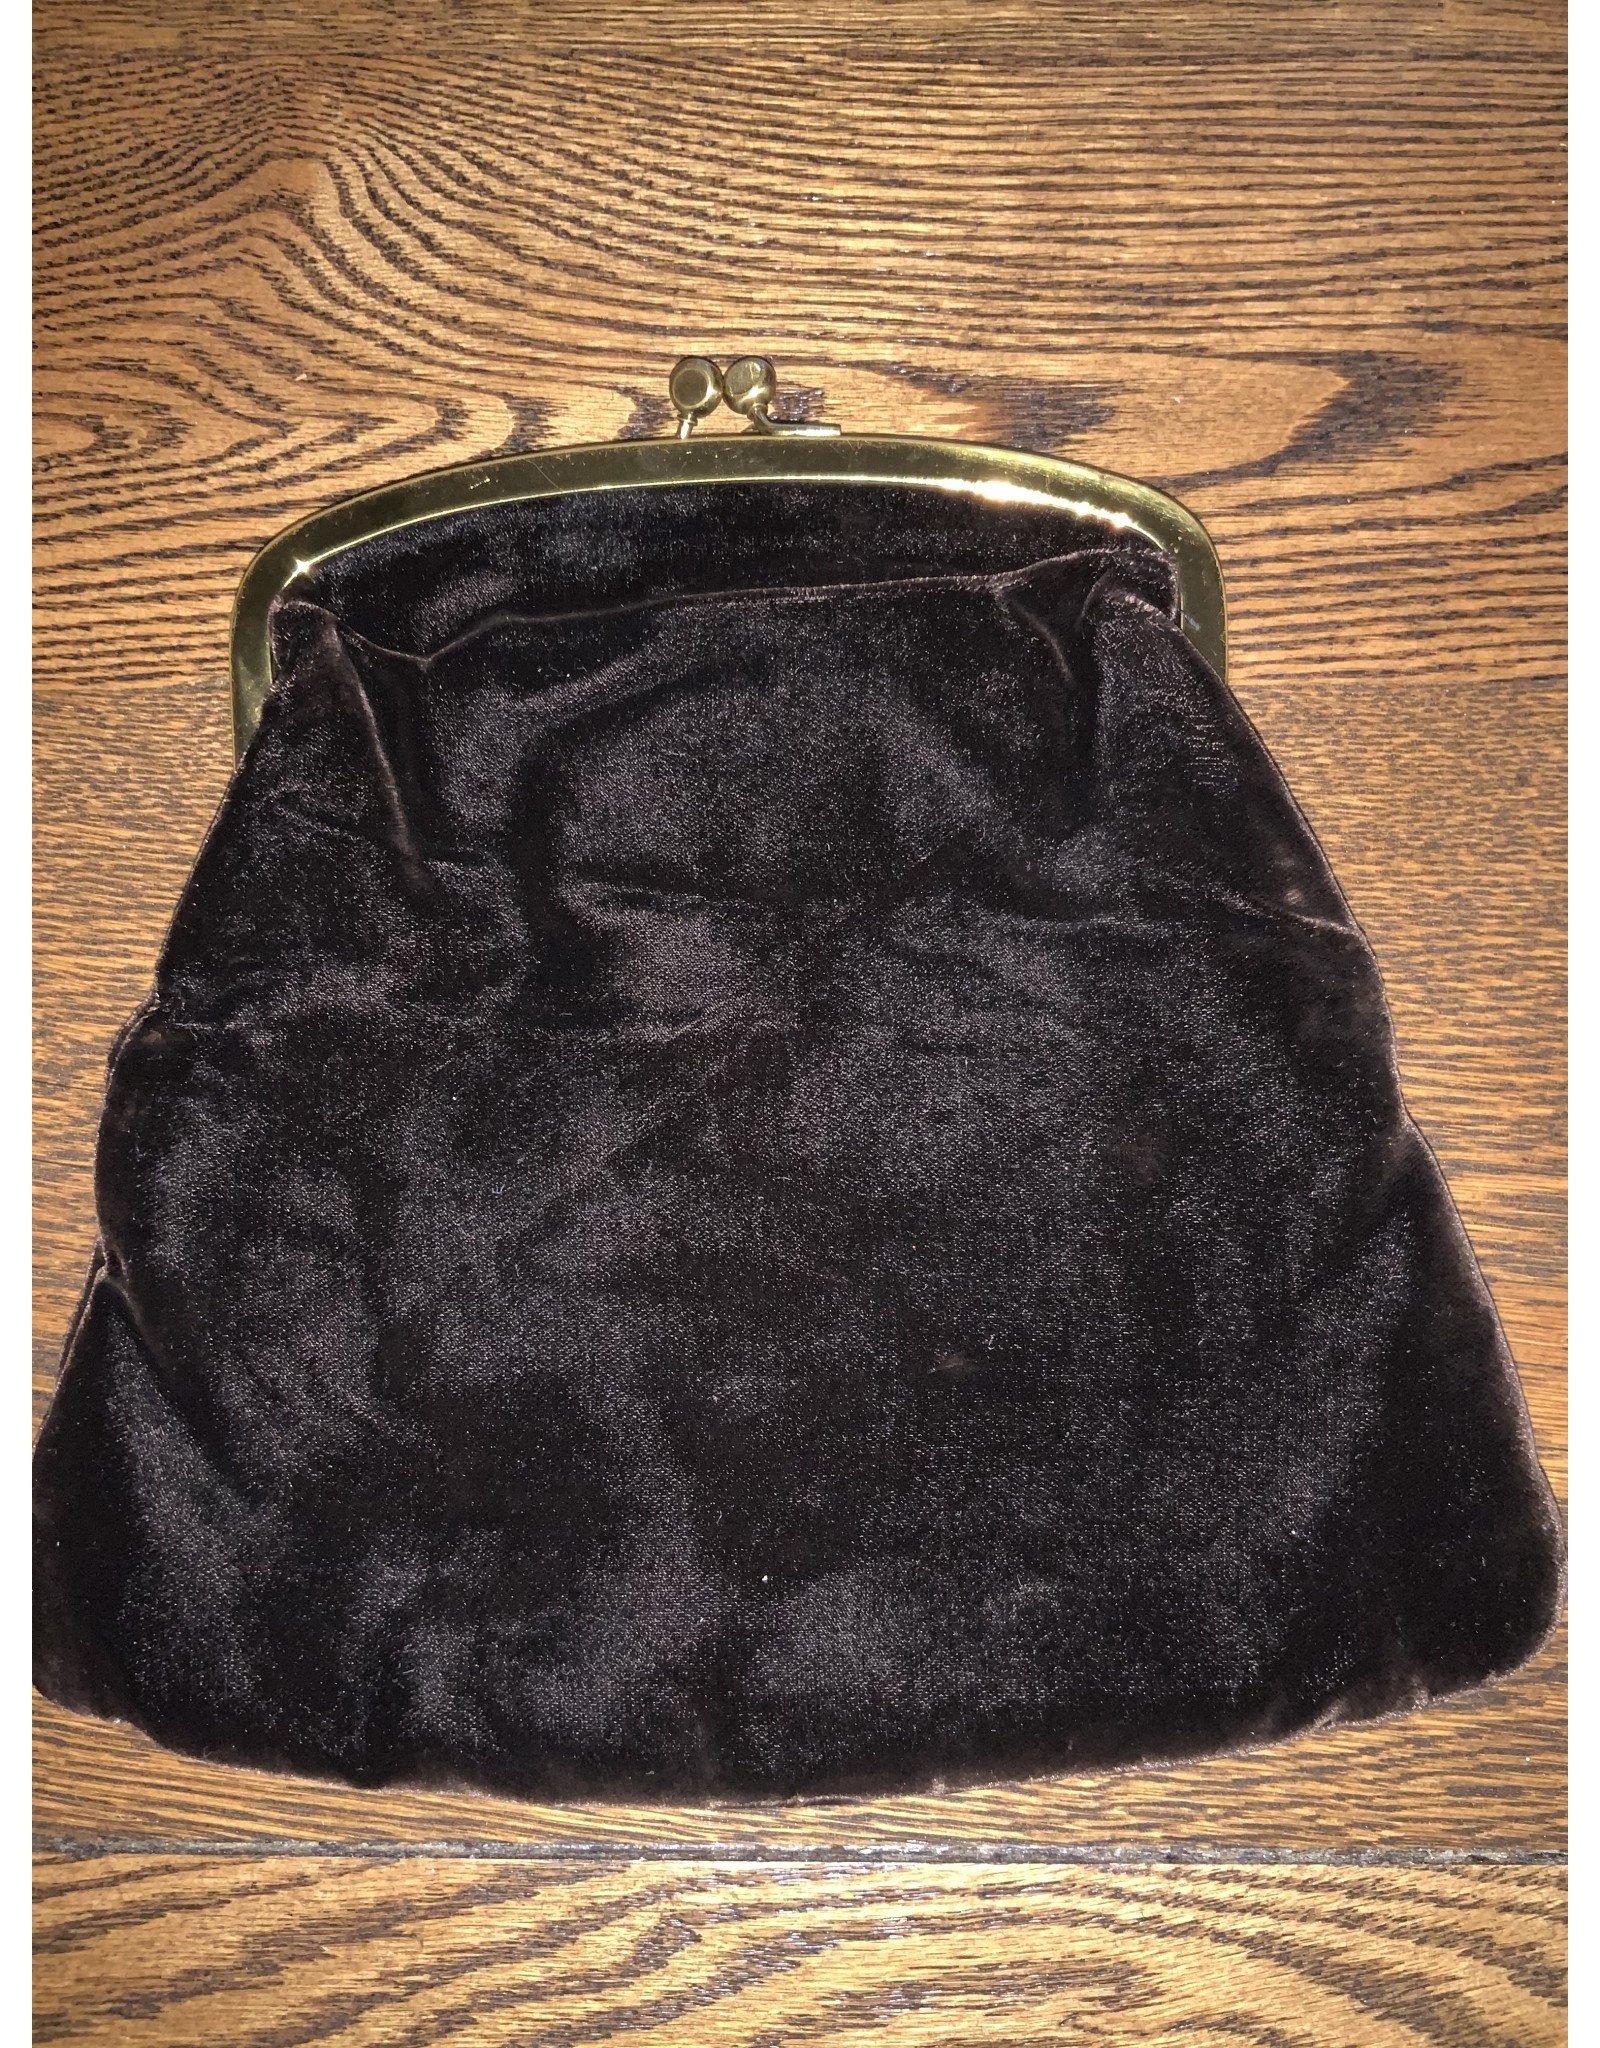 SPV Vintage Ingber Black Velvet Fold Over Clutch with White Lucite Trim, 1950s Evening Handbag Purse